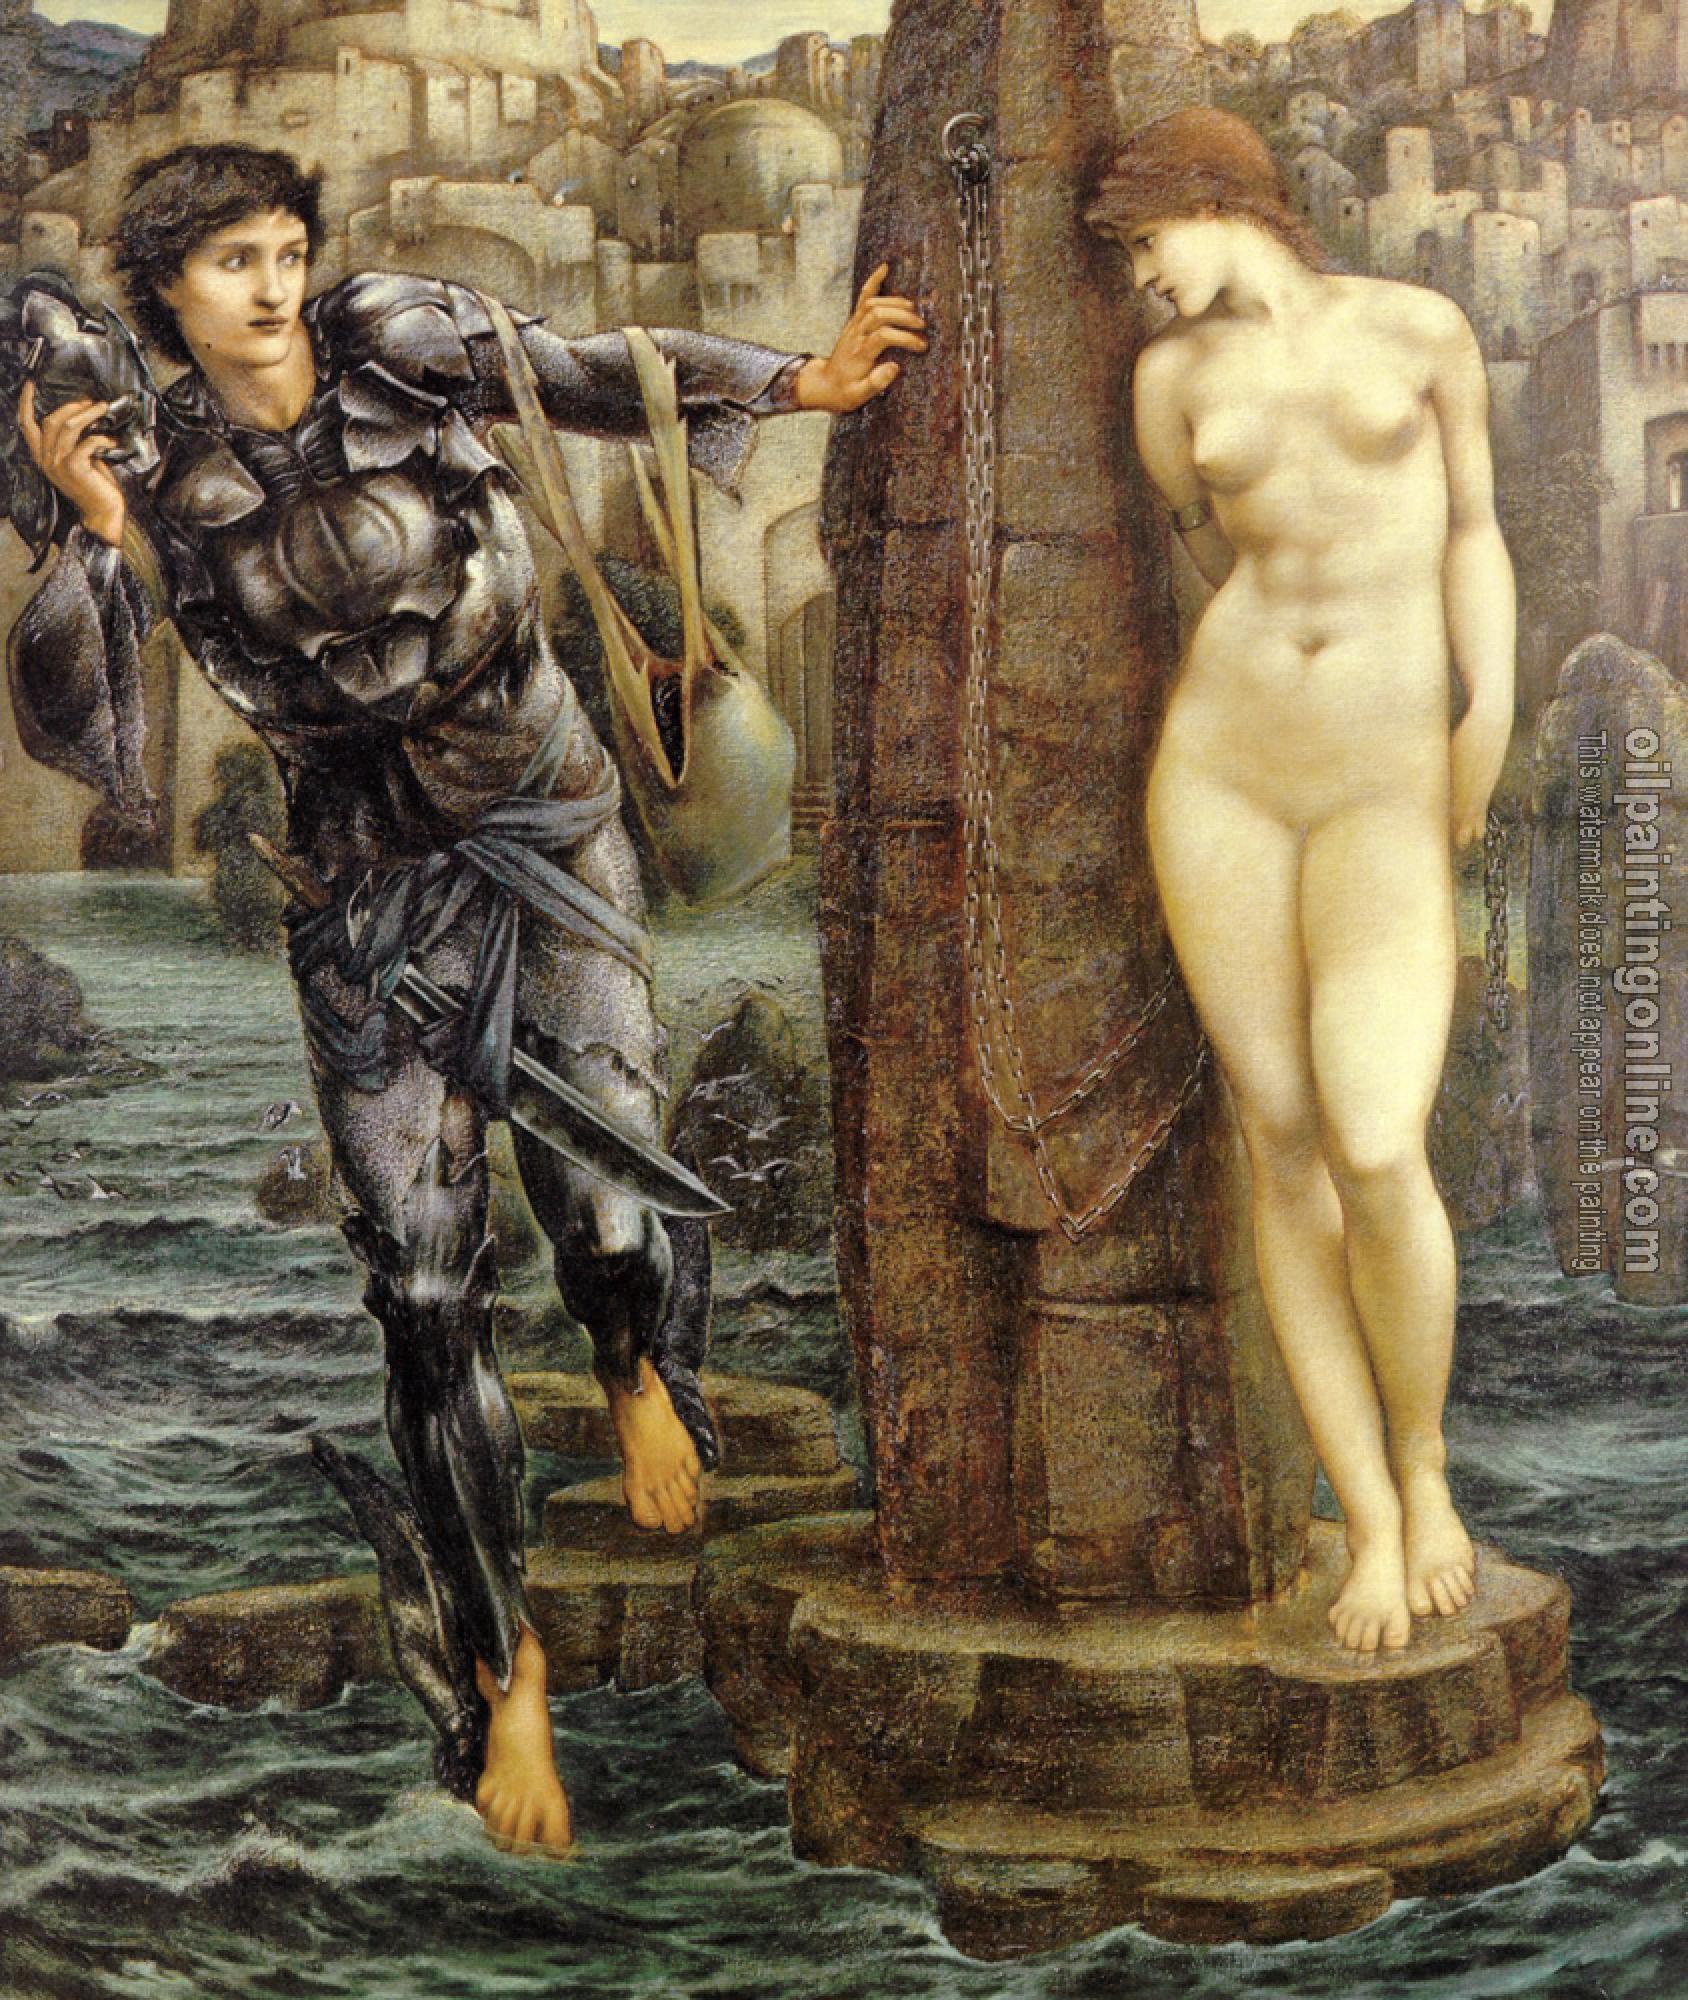 Burne-Jones, Sir Edward Coley - The Rock of Doom